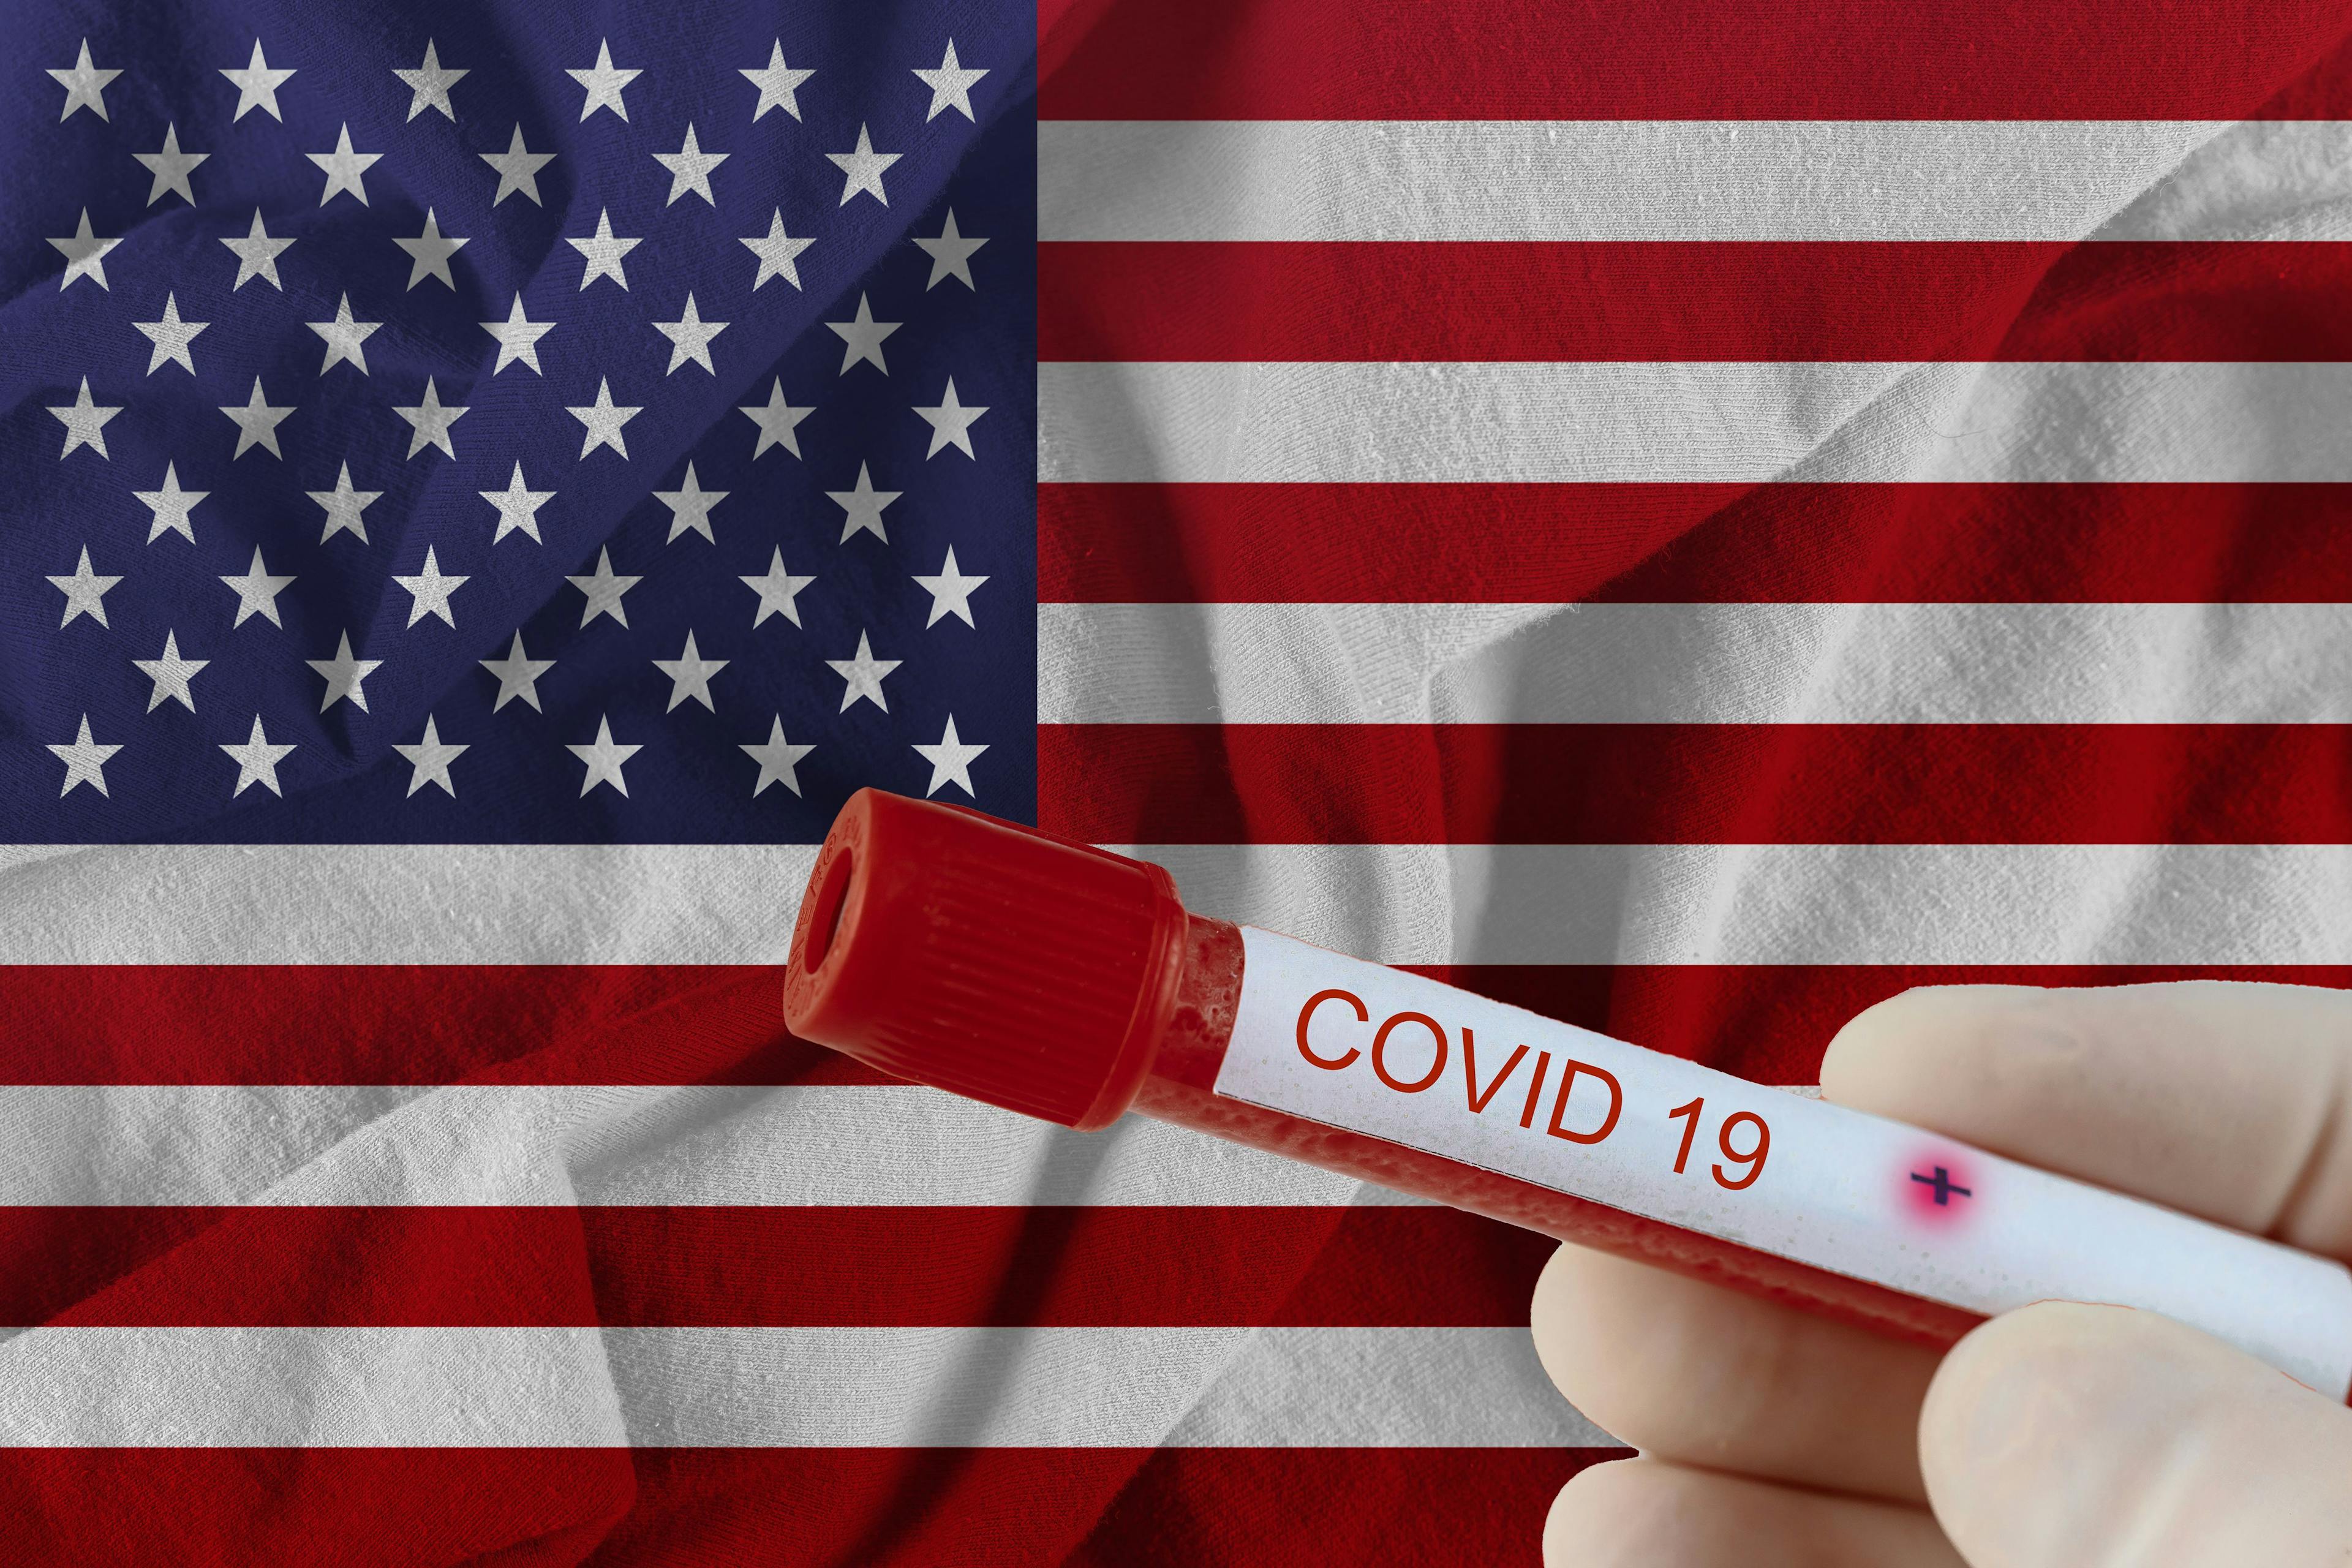 Coronavirus: Study shows practice strain remains high